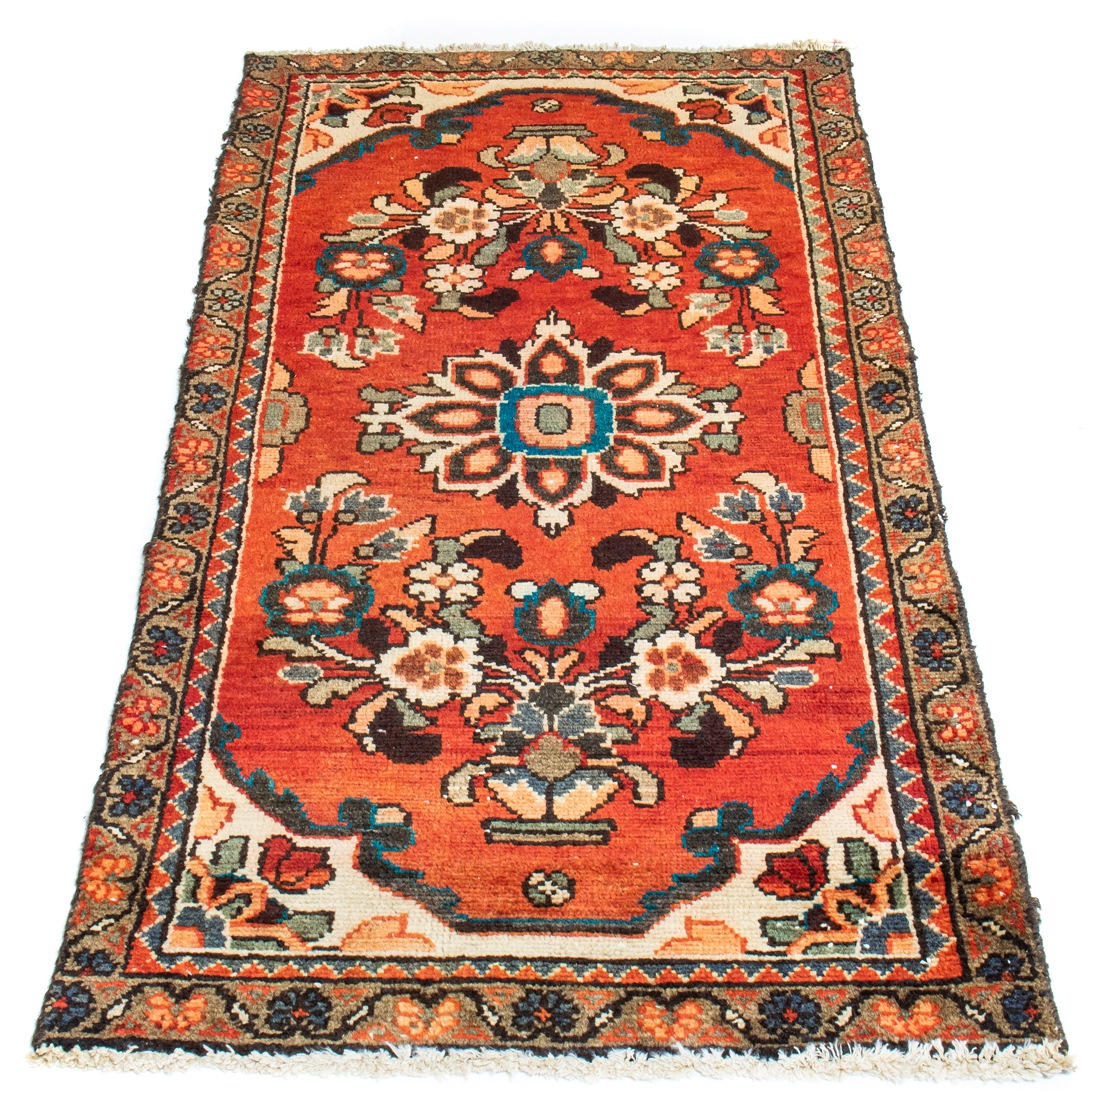 A HAMADAN CARPET A Hamadan carpet  2d30ff